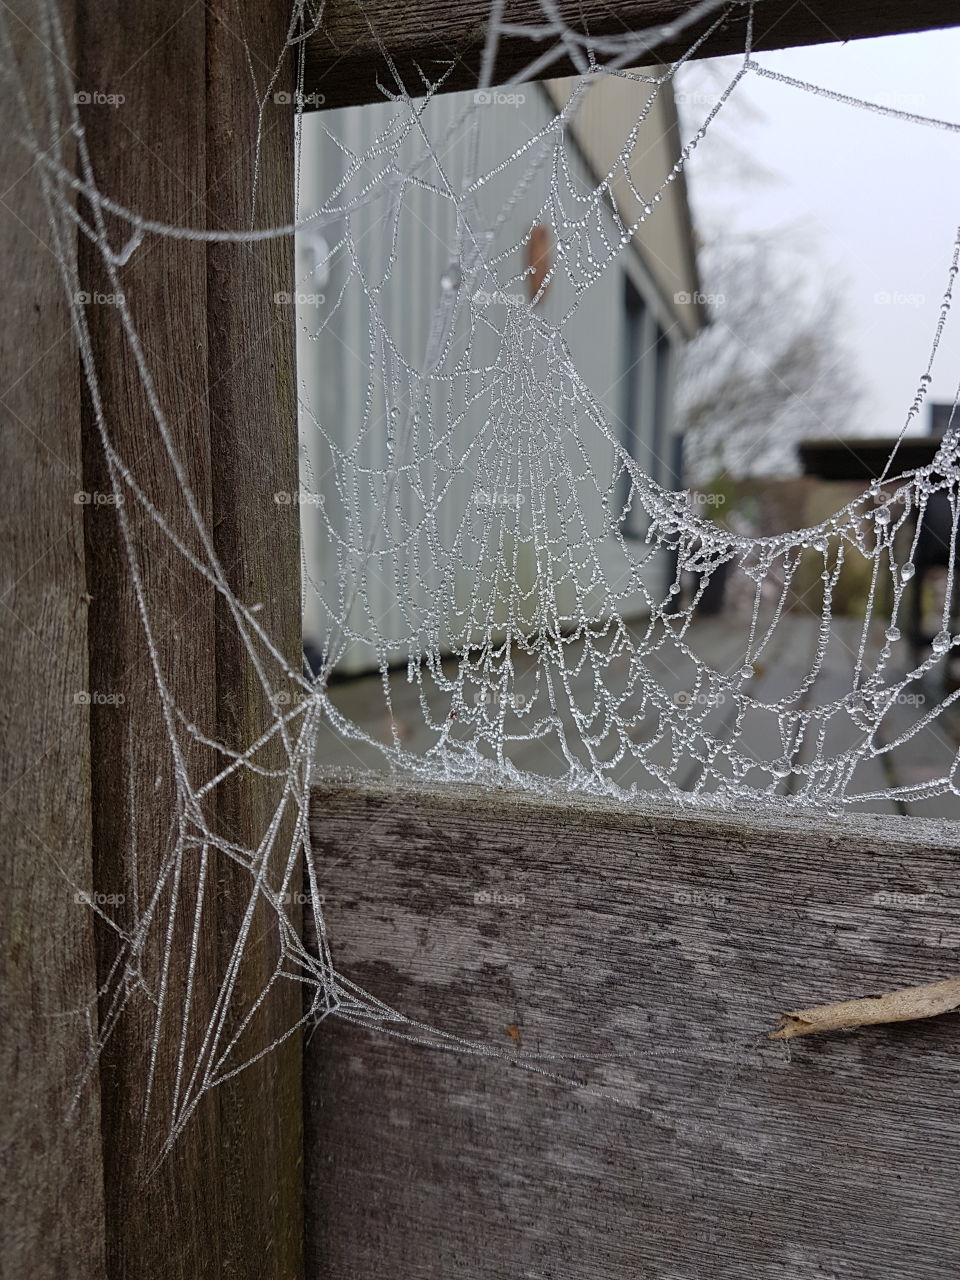 spider web misty cobweb